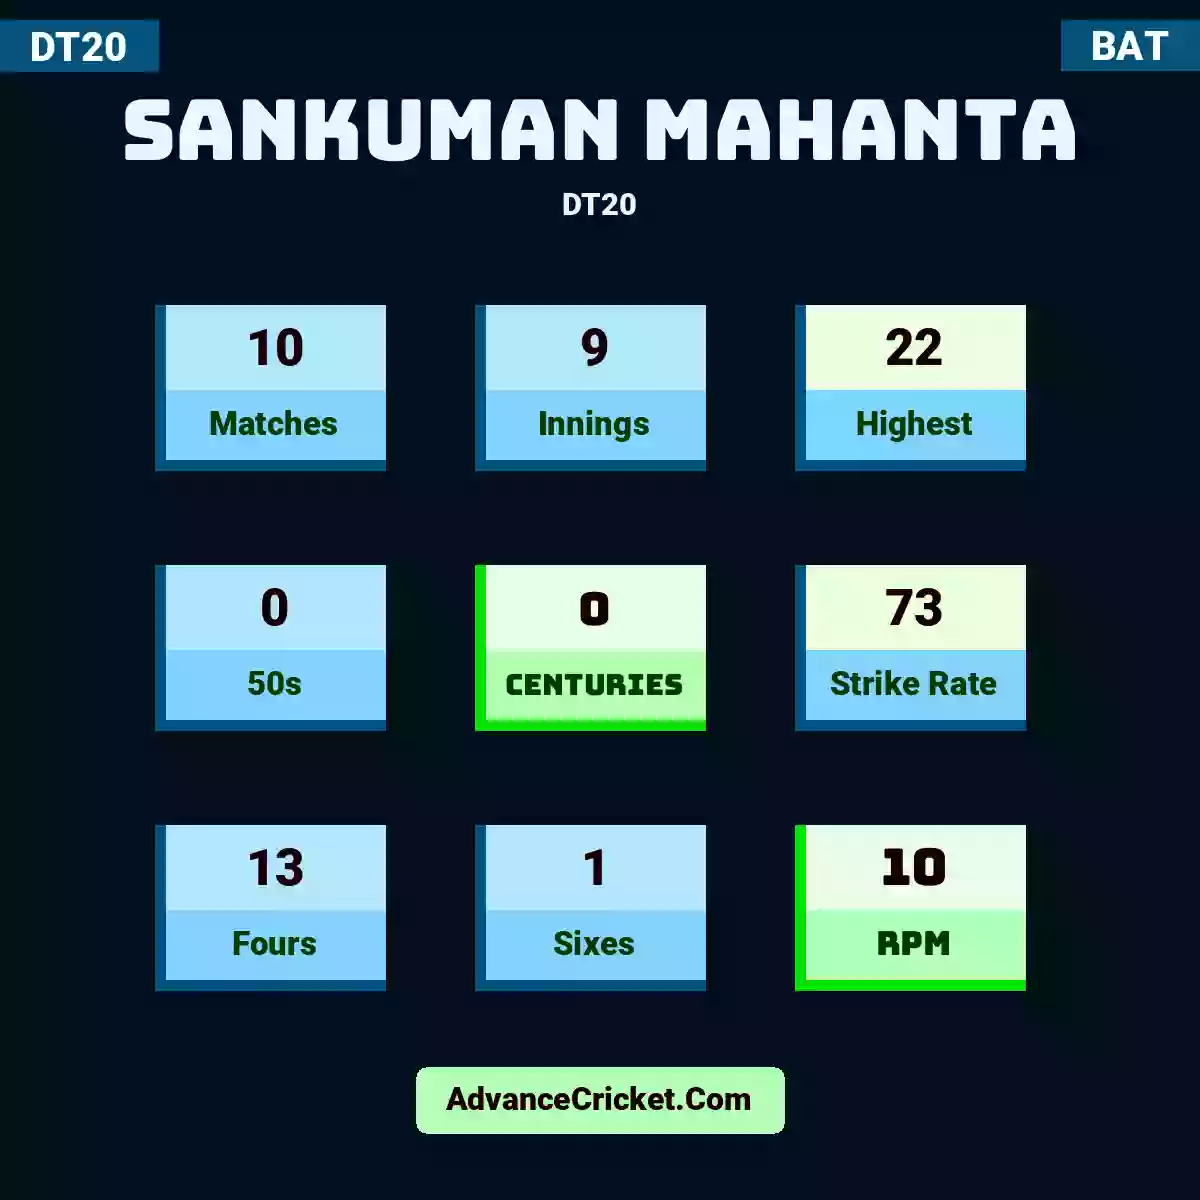 Sankuman Mahanta DT20 , Sankuman Mahanta played 10 matches, scored 22 runs as highest, 0 half-centuries, and 0 centuries, with a strike rate of 73. s.mahanta hit 13 fours and 1 sixes, with an RPM of 10.